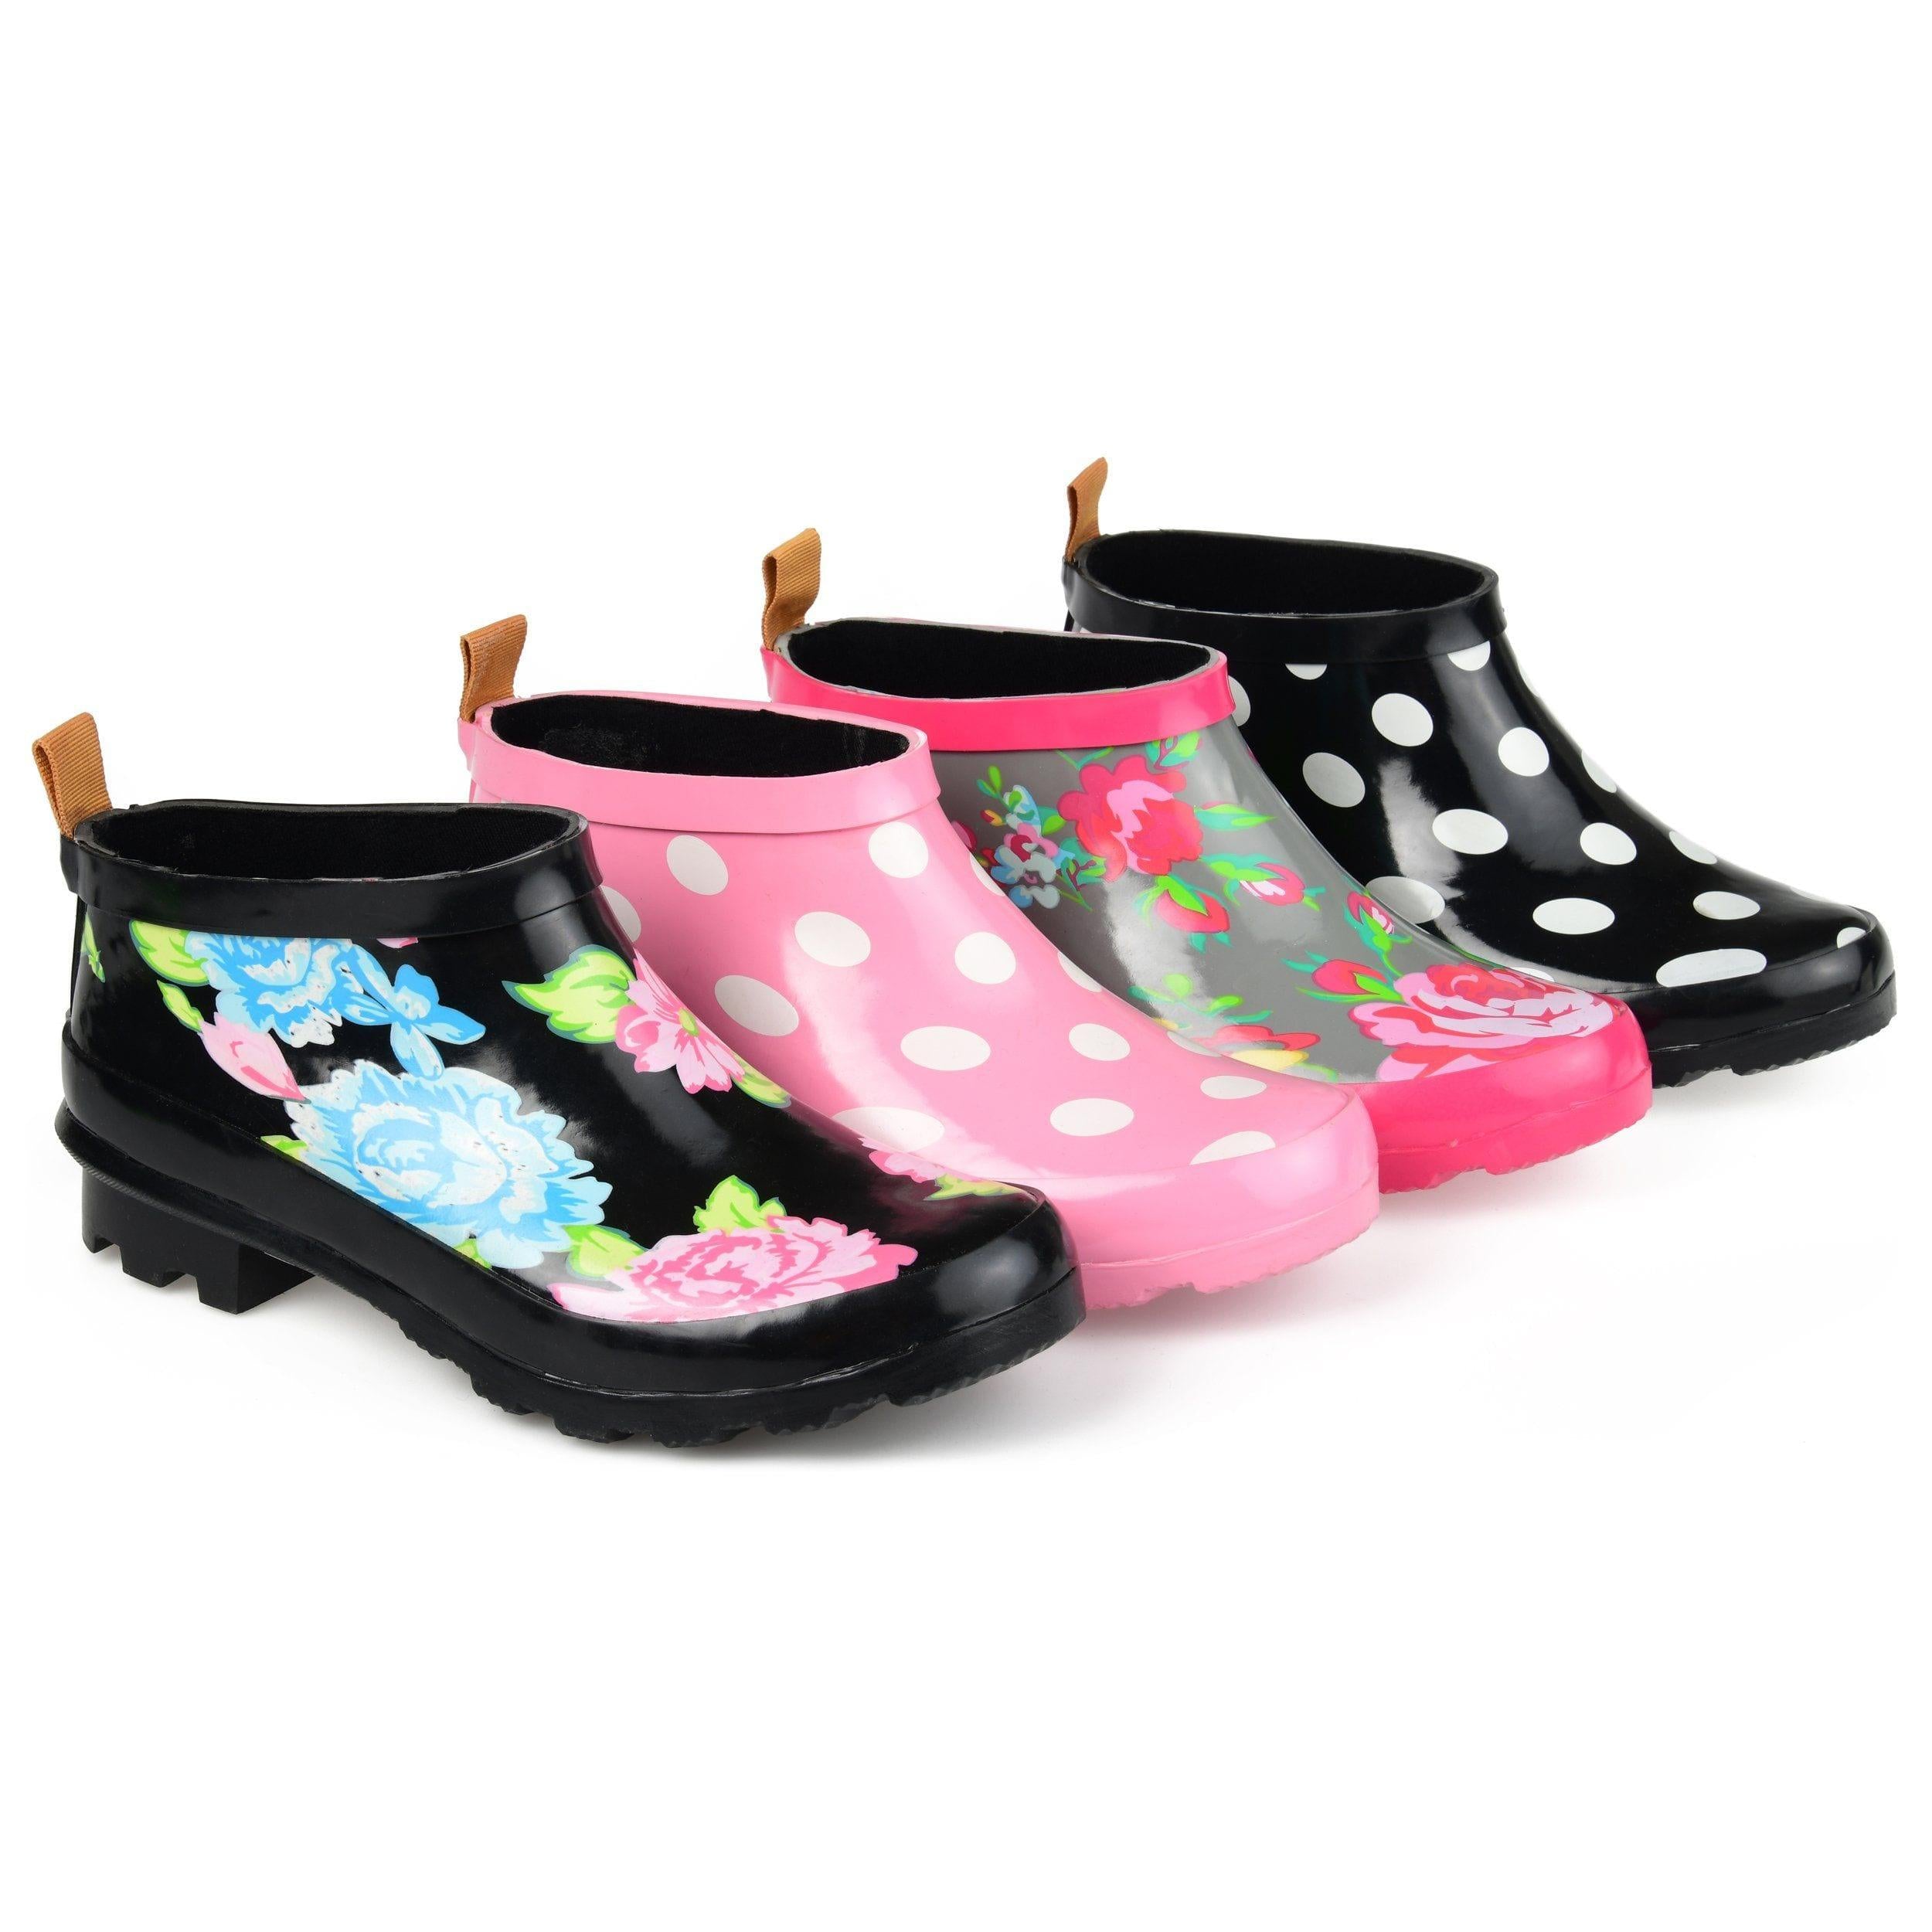 Rainer Boots, Women's Waterproof Ankle Boots